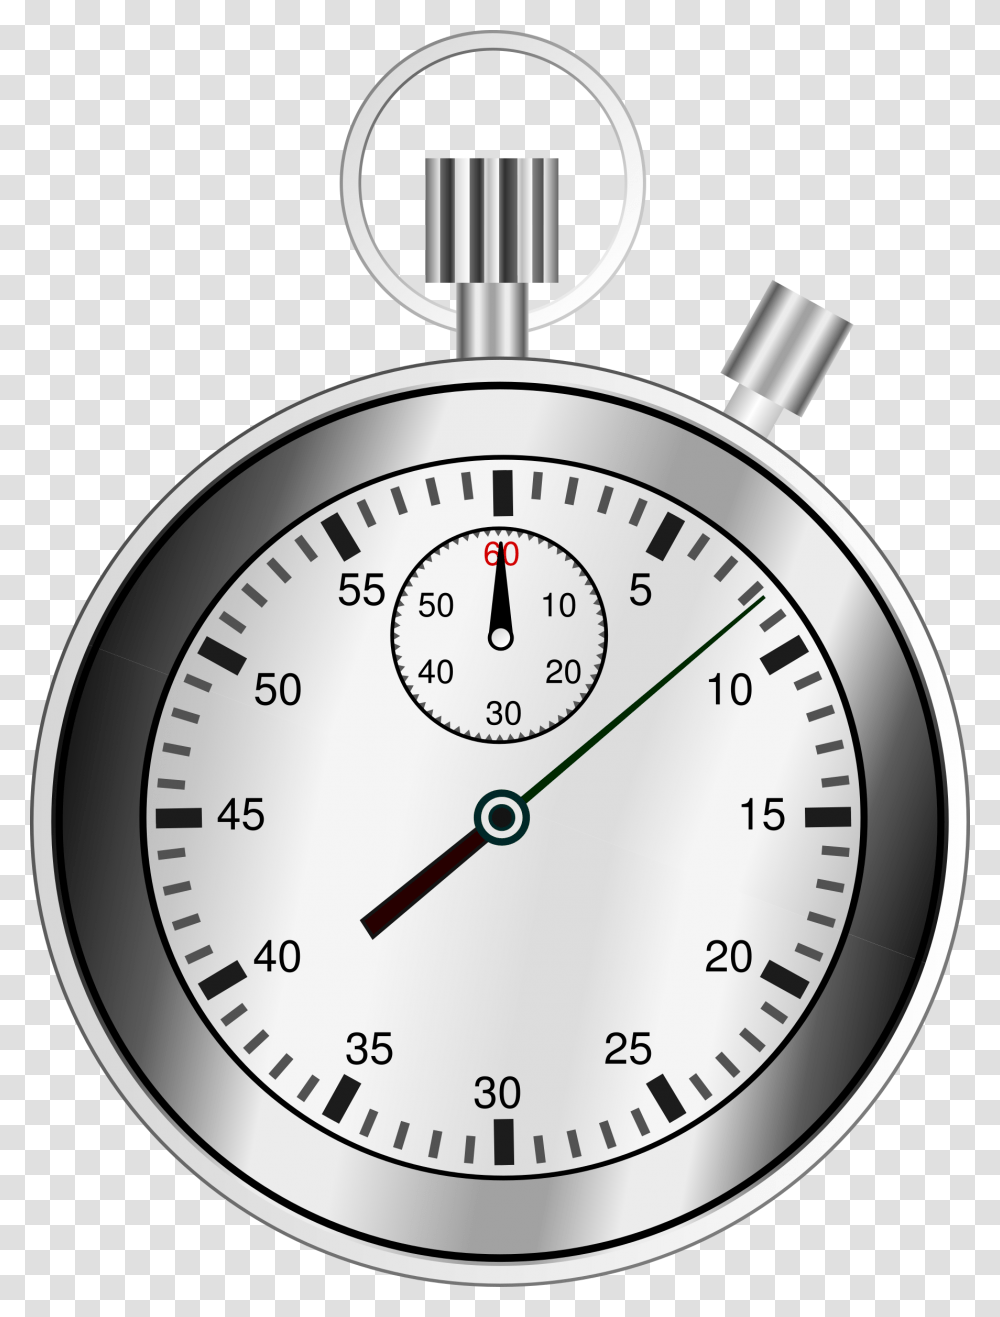 Cronmetro Tiempo Reloj Fecha Lmite Hora Stop Watch Clip Art Free, Stopwatch, Clock Tower, Architecture, Building Transparent Png